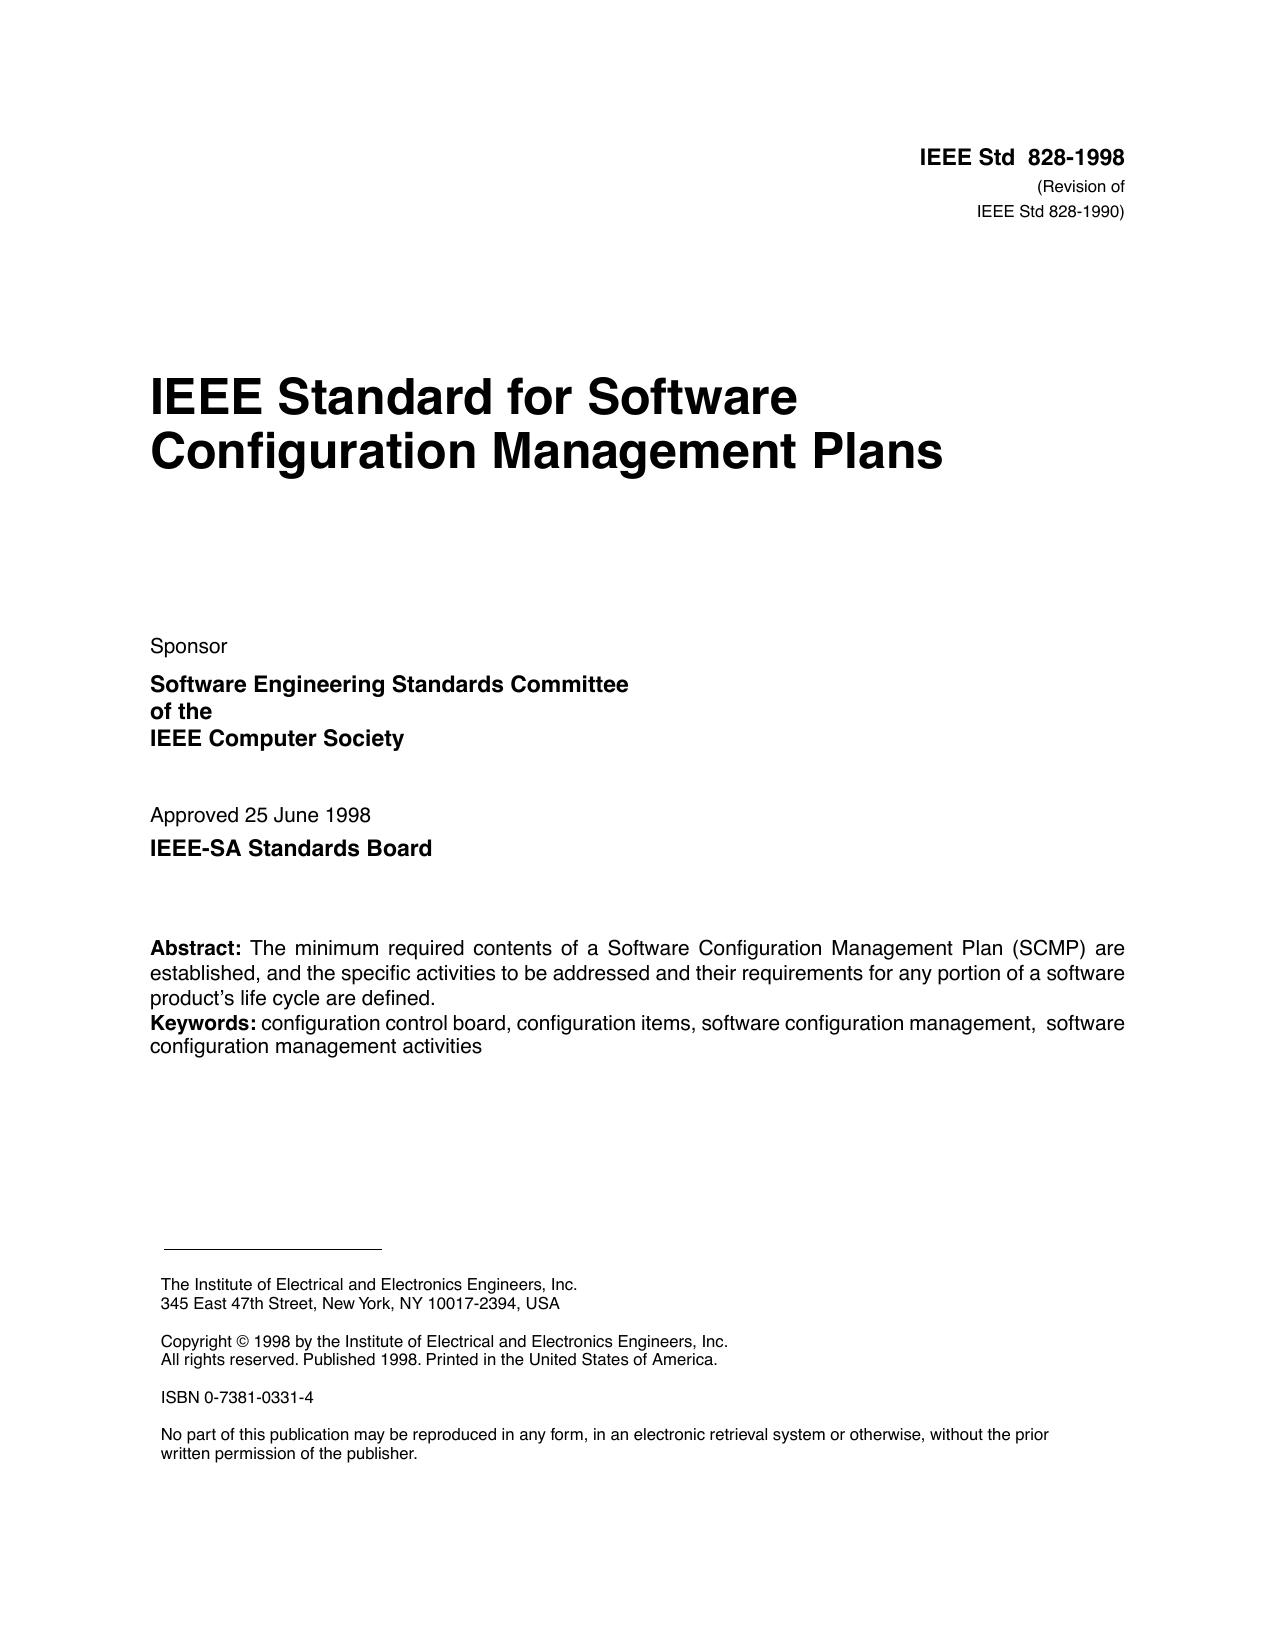 IEEE Standard For Software Configuration Management Plans - IEEE Std 828-1998